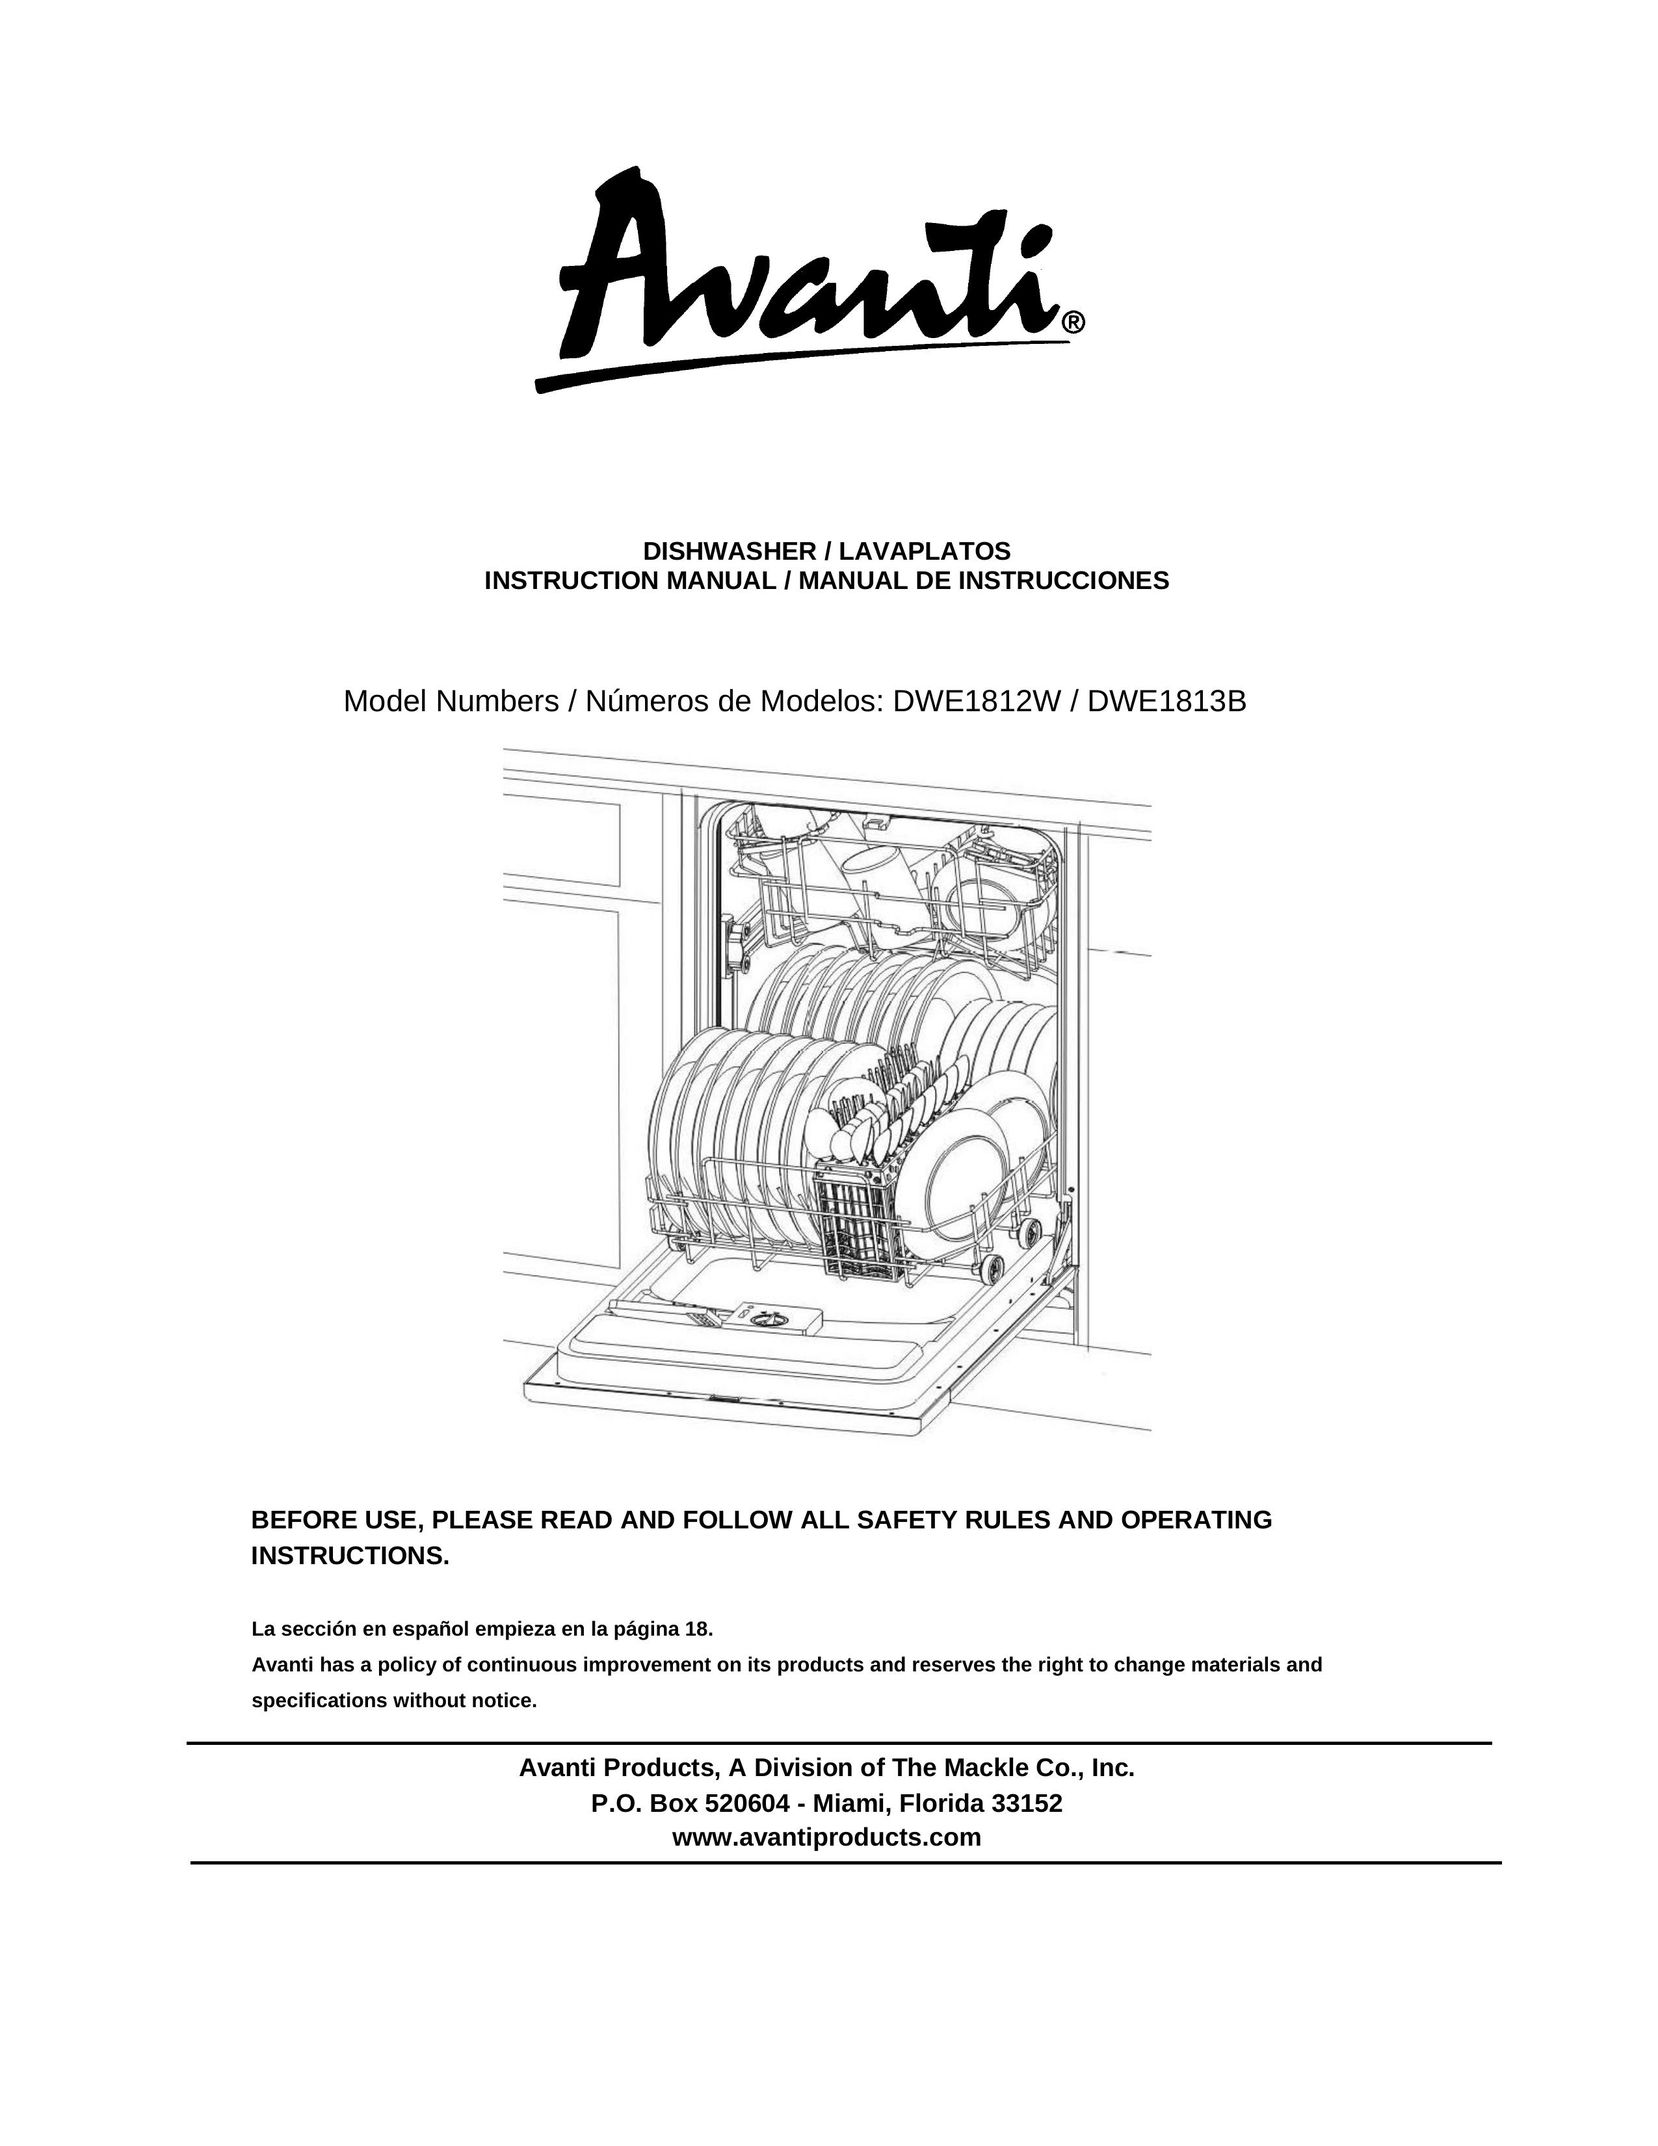 Avanti DWE1812W Dishwasher User Manual